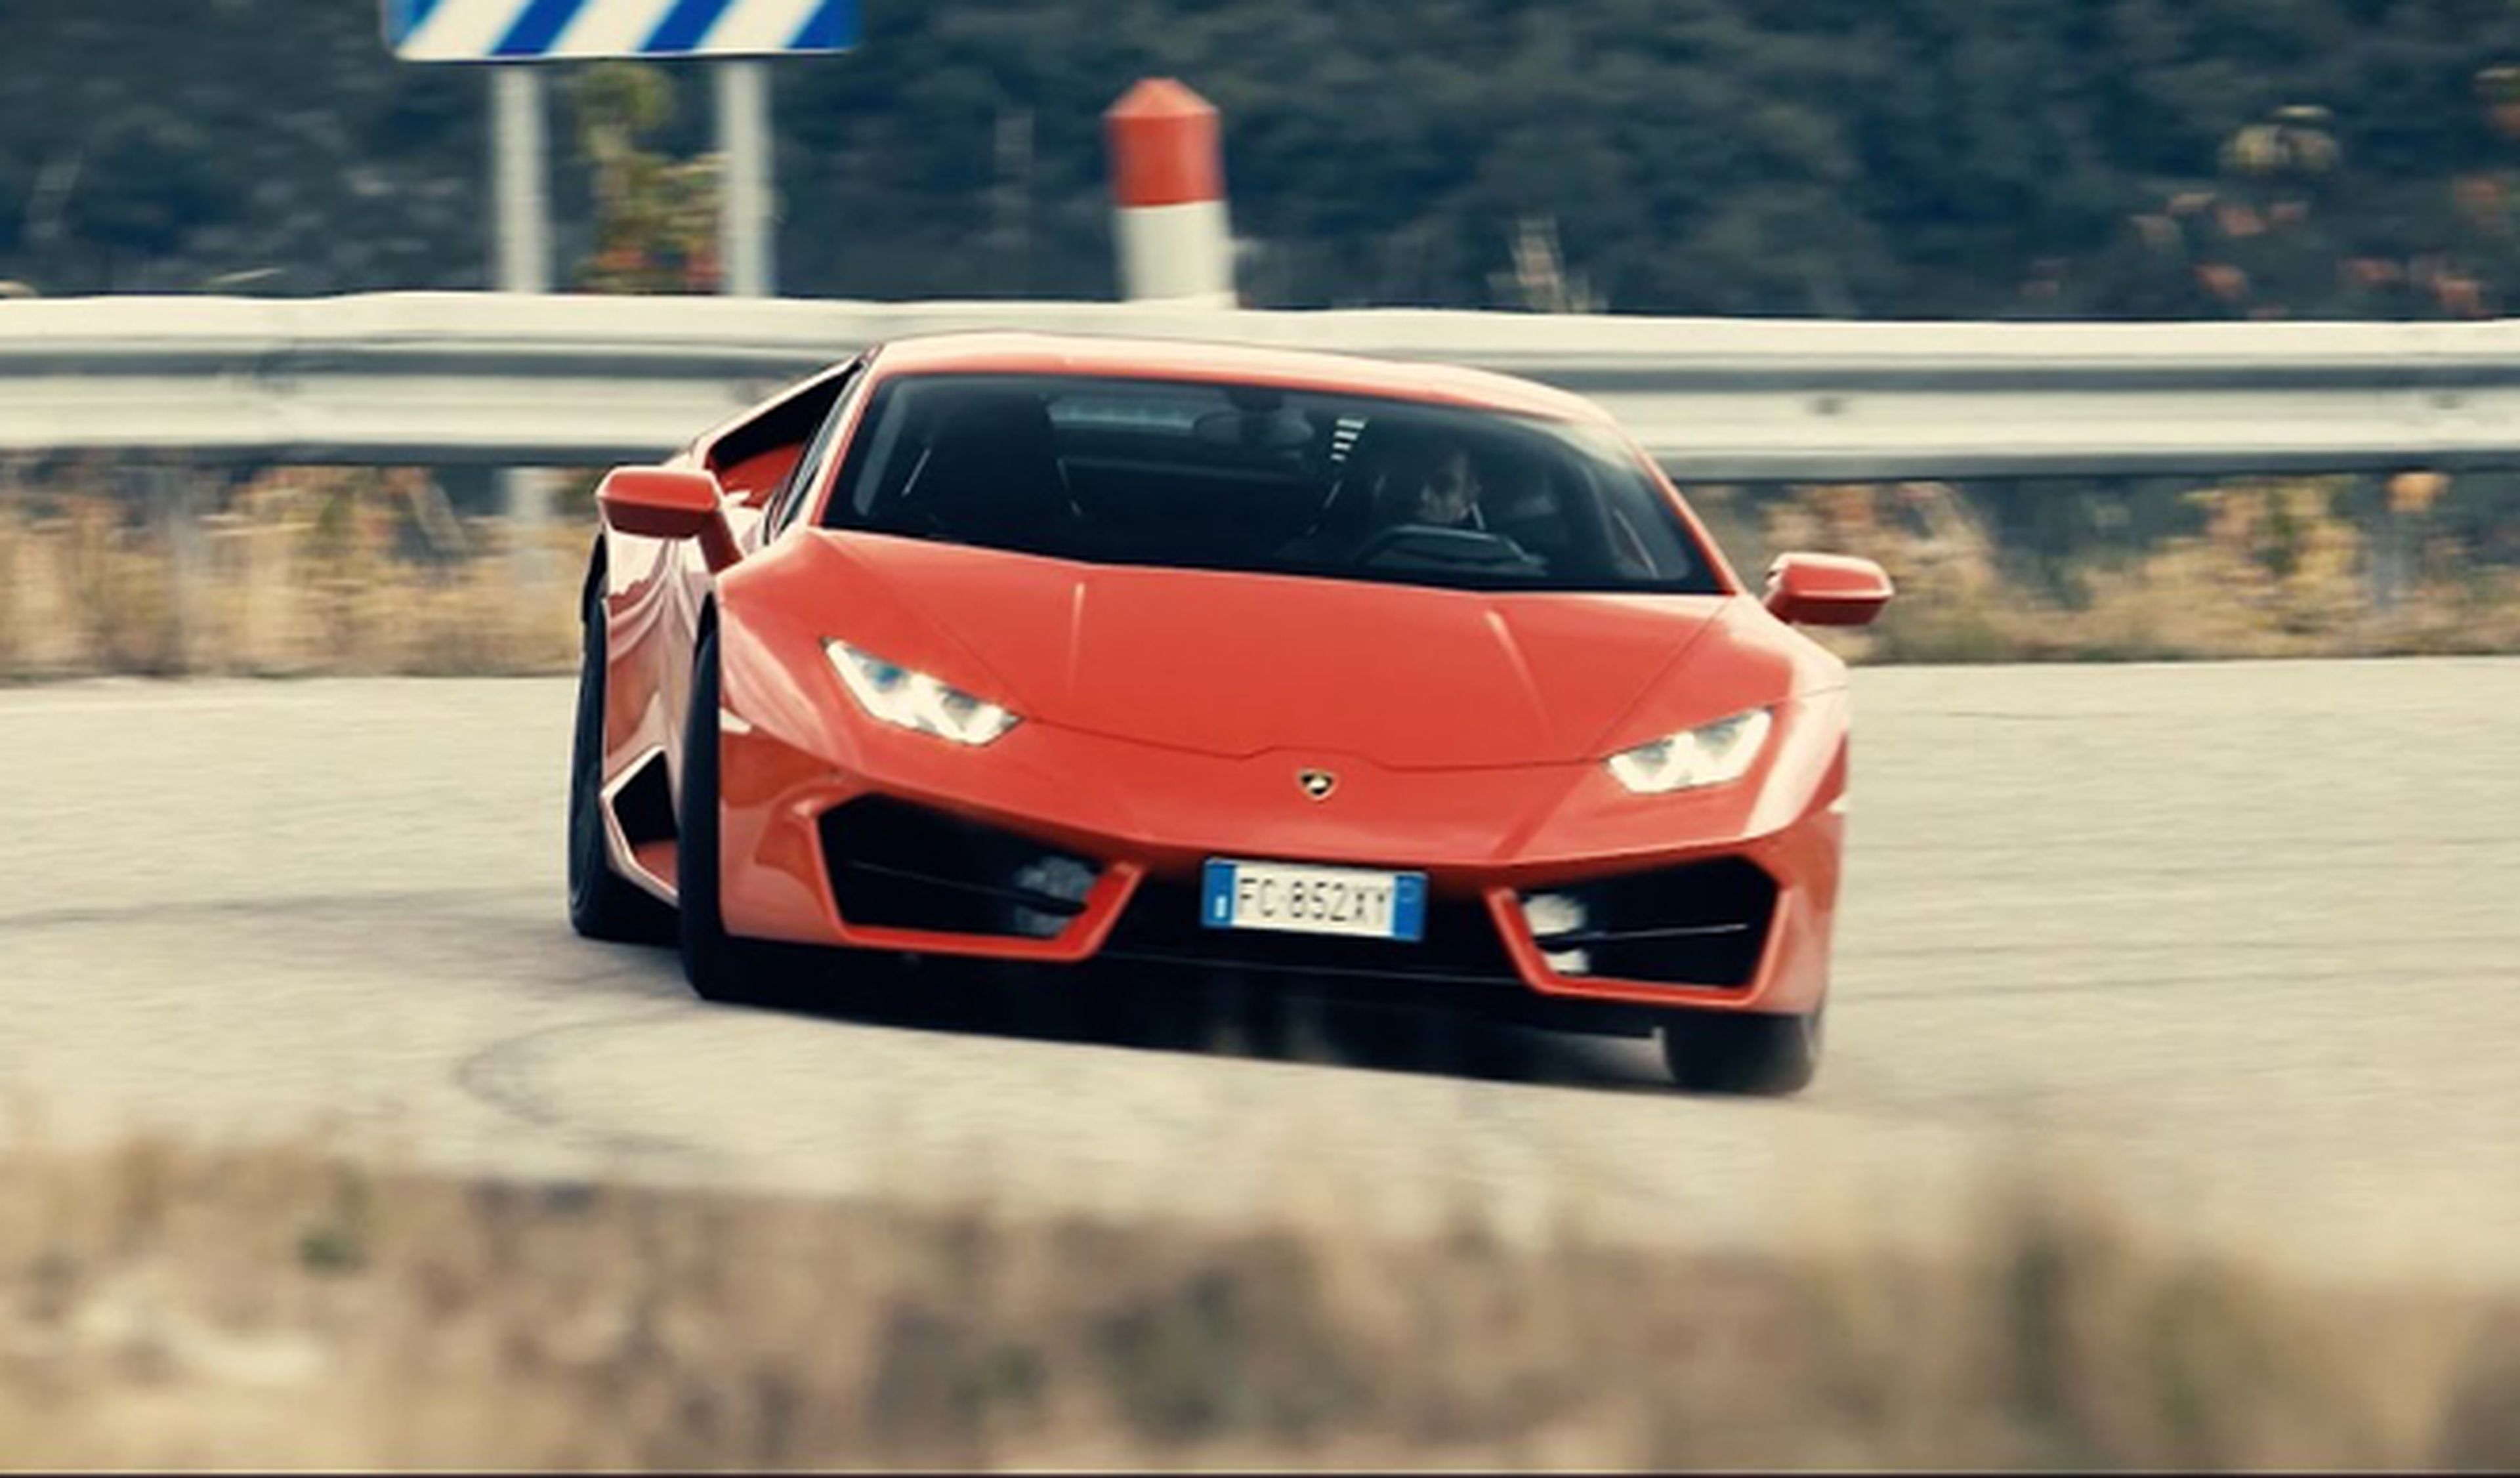 Vídeo: al volante de un Lamborghini Huracán LP580-2